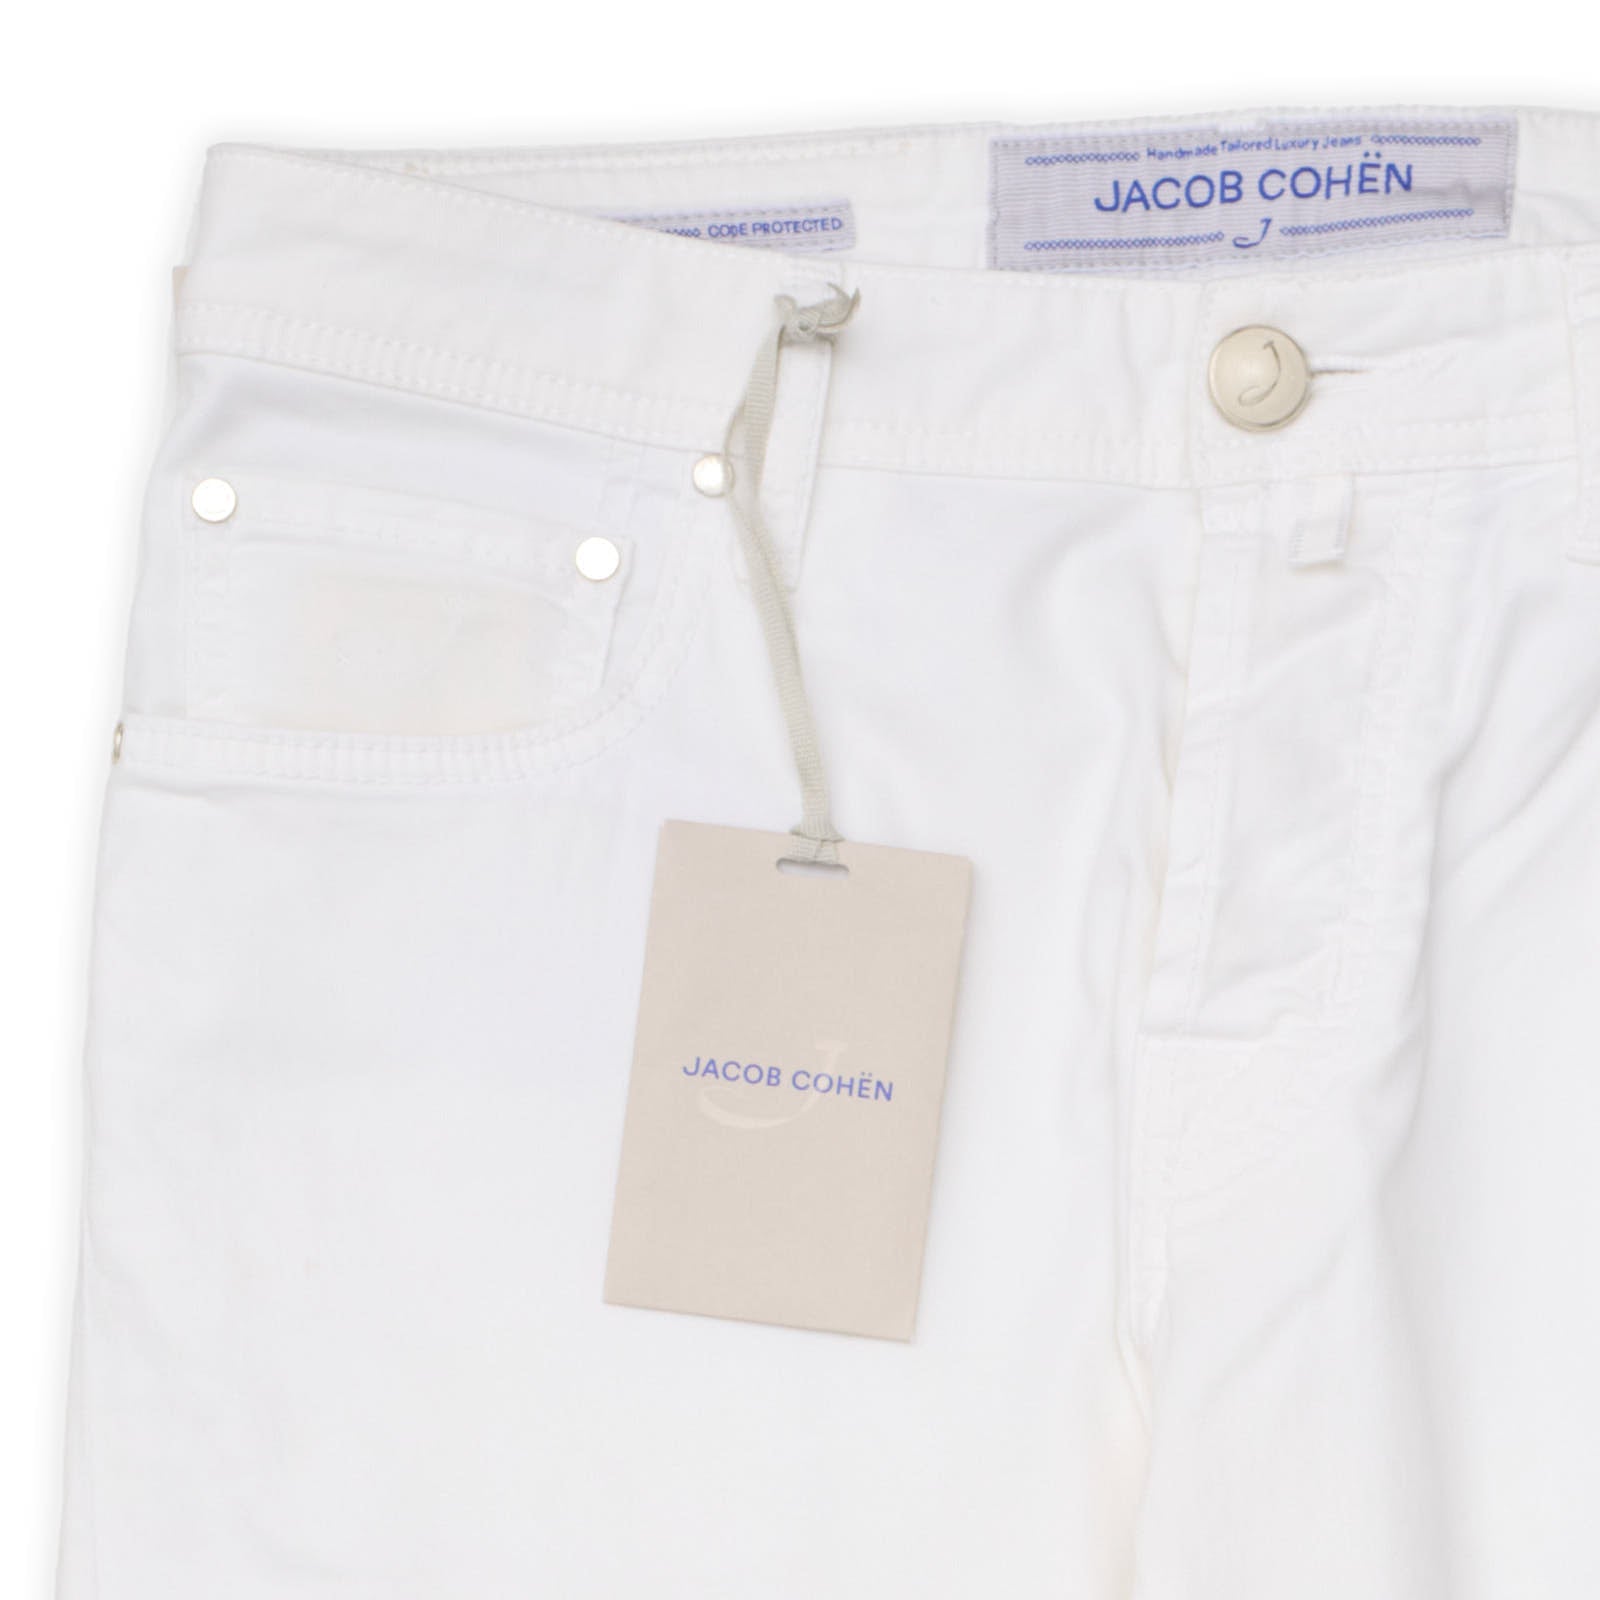 JACOB COHEN 688 White Premium Denim Stretch  Slim Jeans Pants NEW US 30